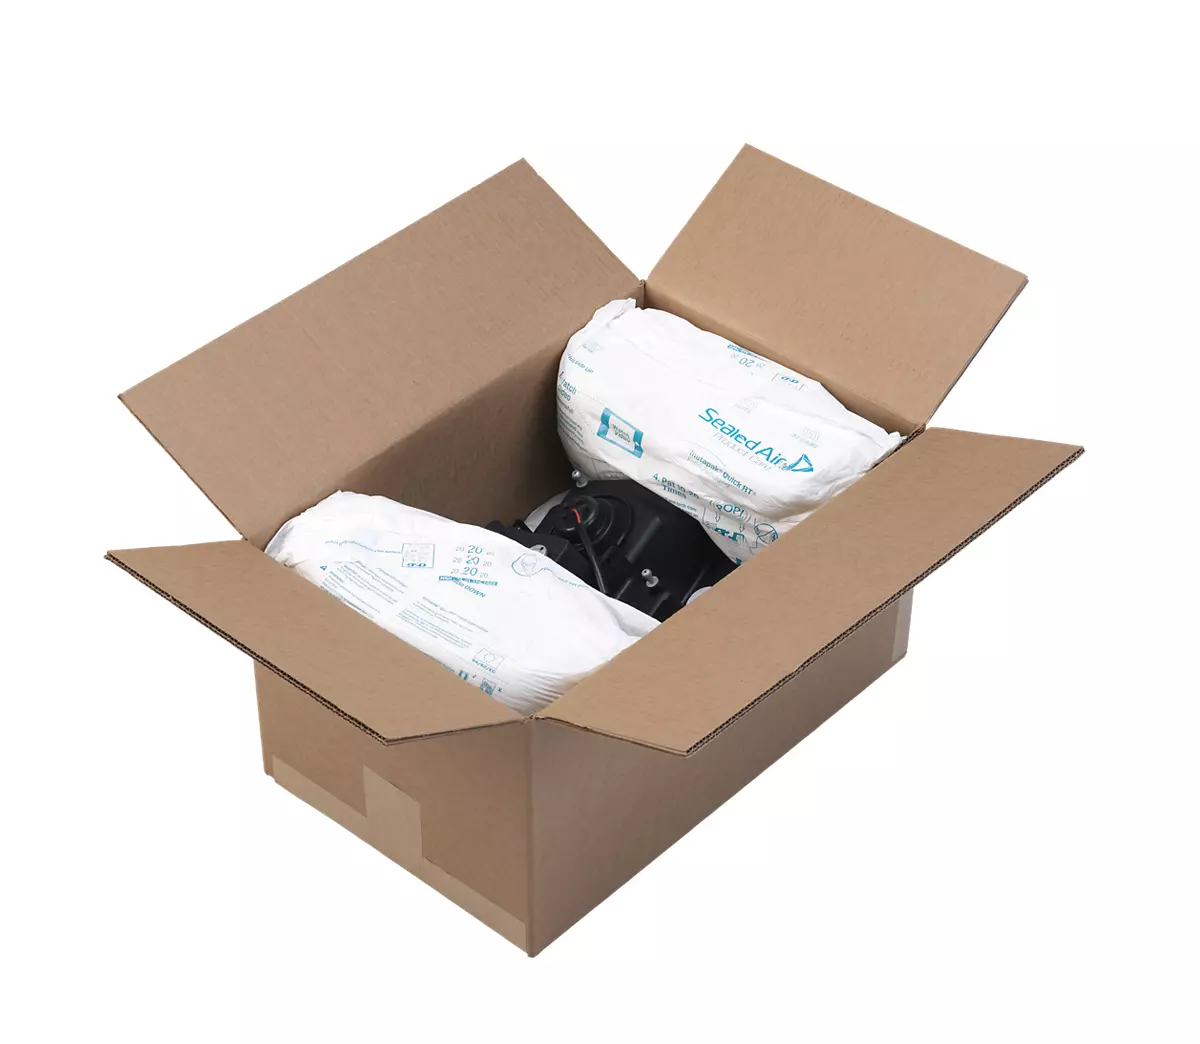 digital camera packaged in Instapak Quick foam packaging